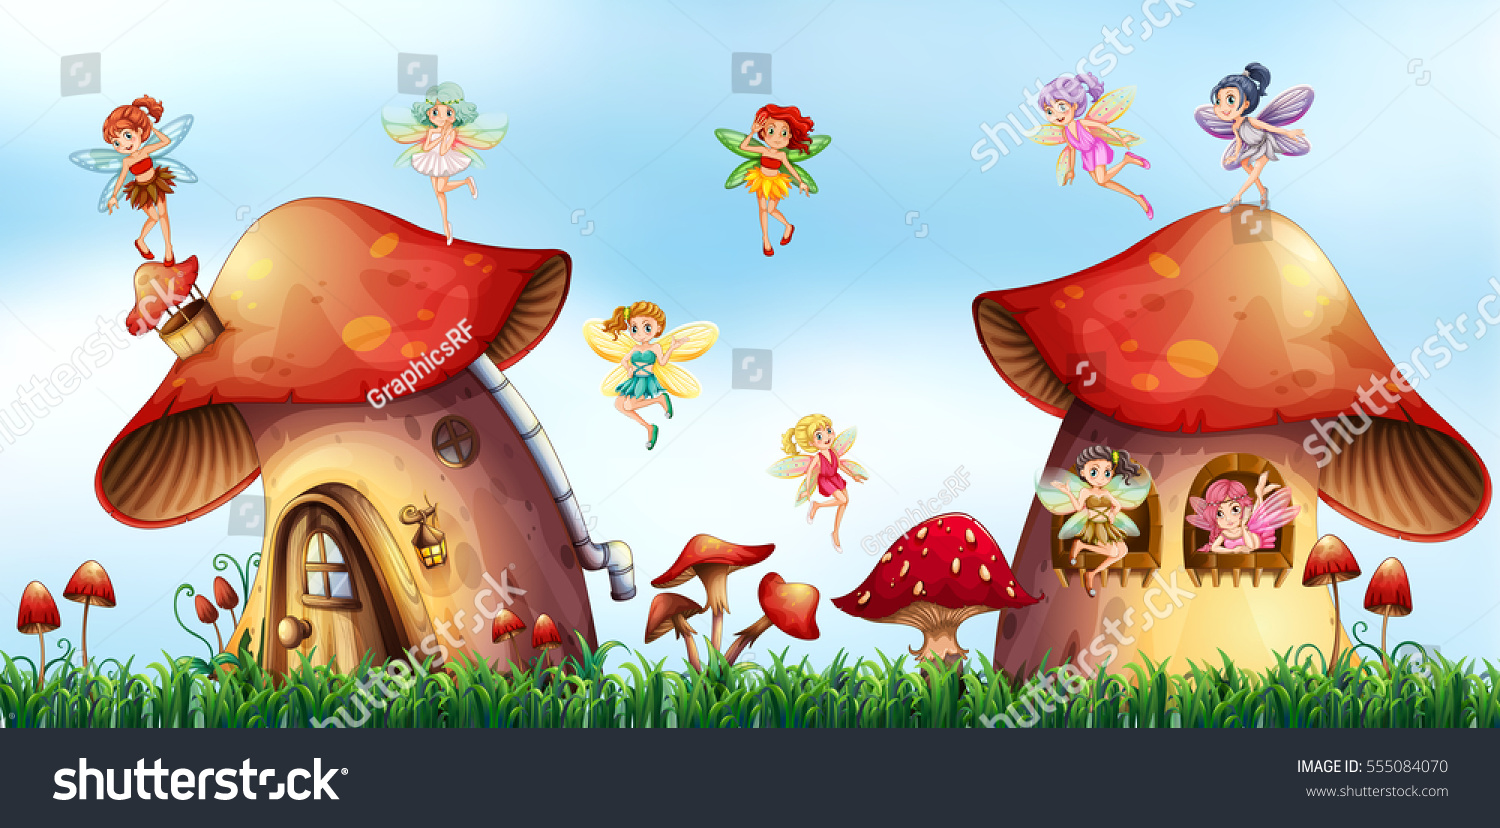 Image Result For Mushroom Garden Art